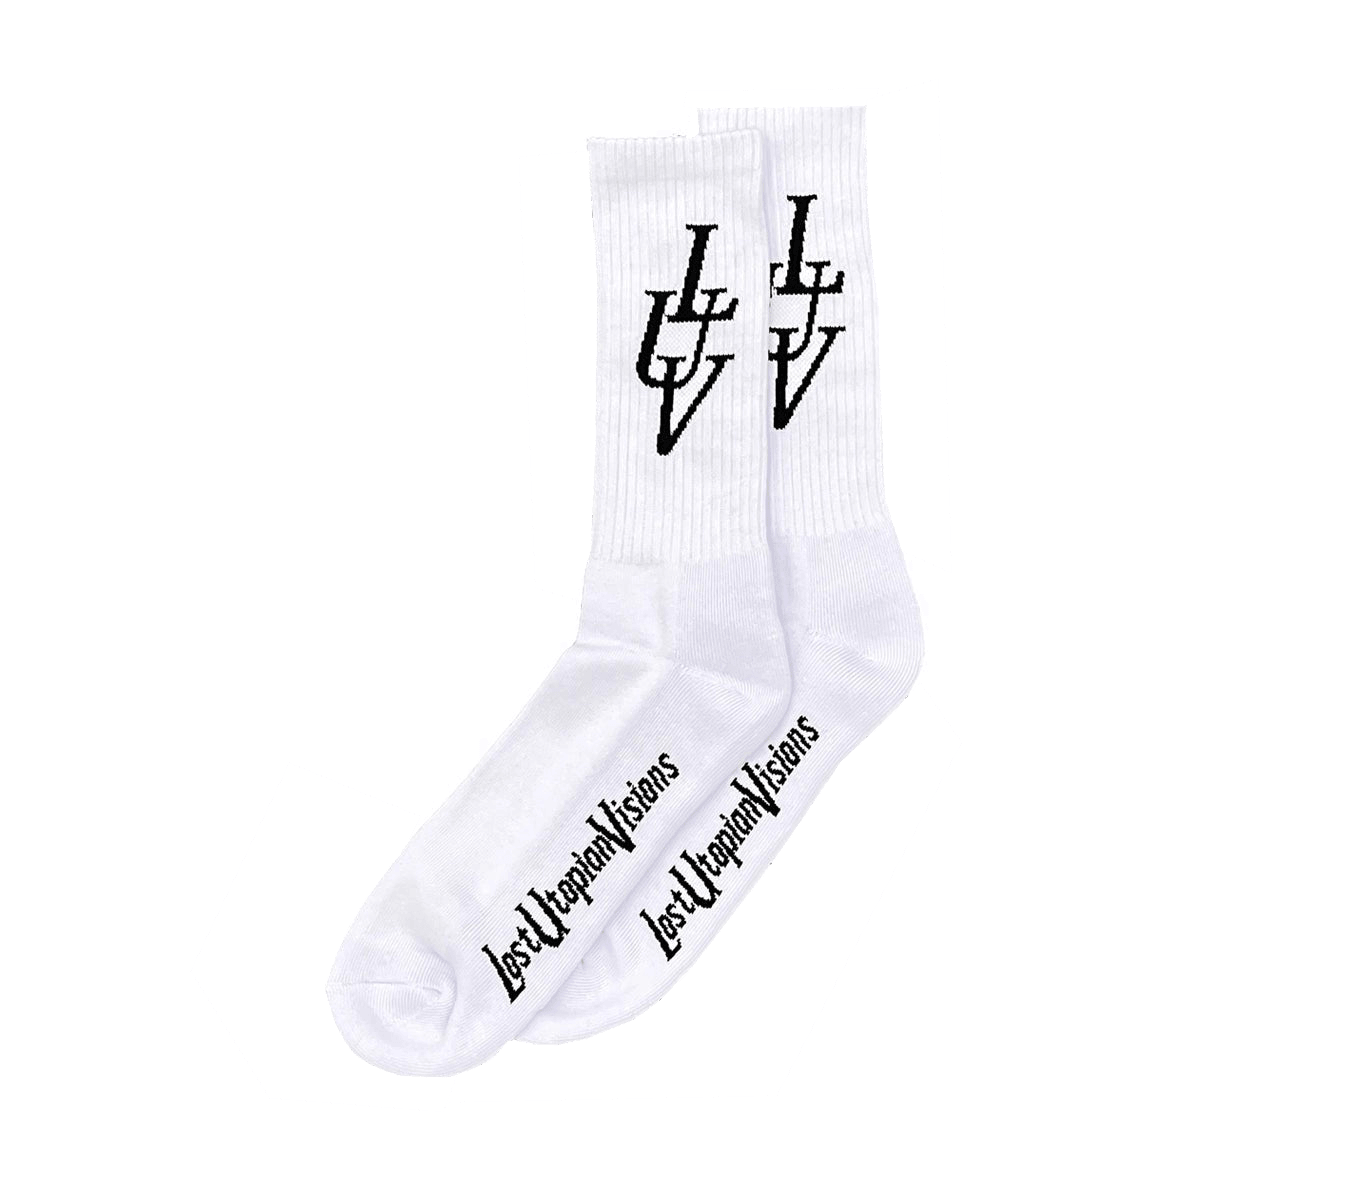 Lost Utopian Visions LUV Paris Socks - White / Black - OS -